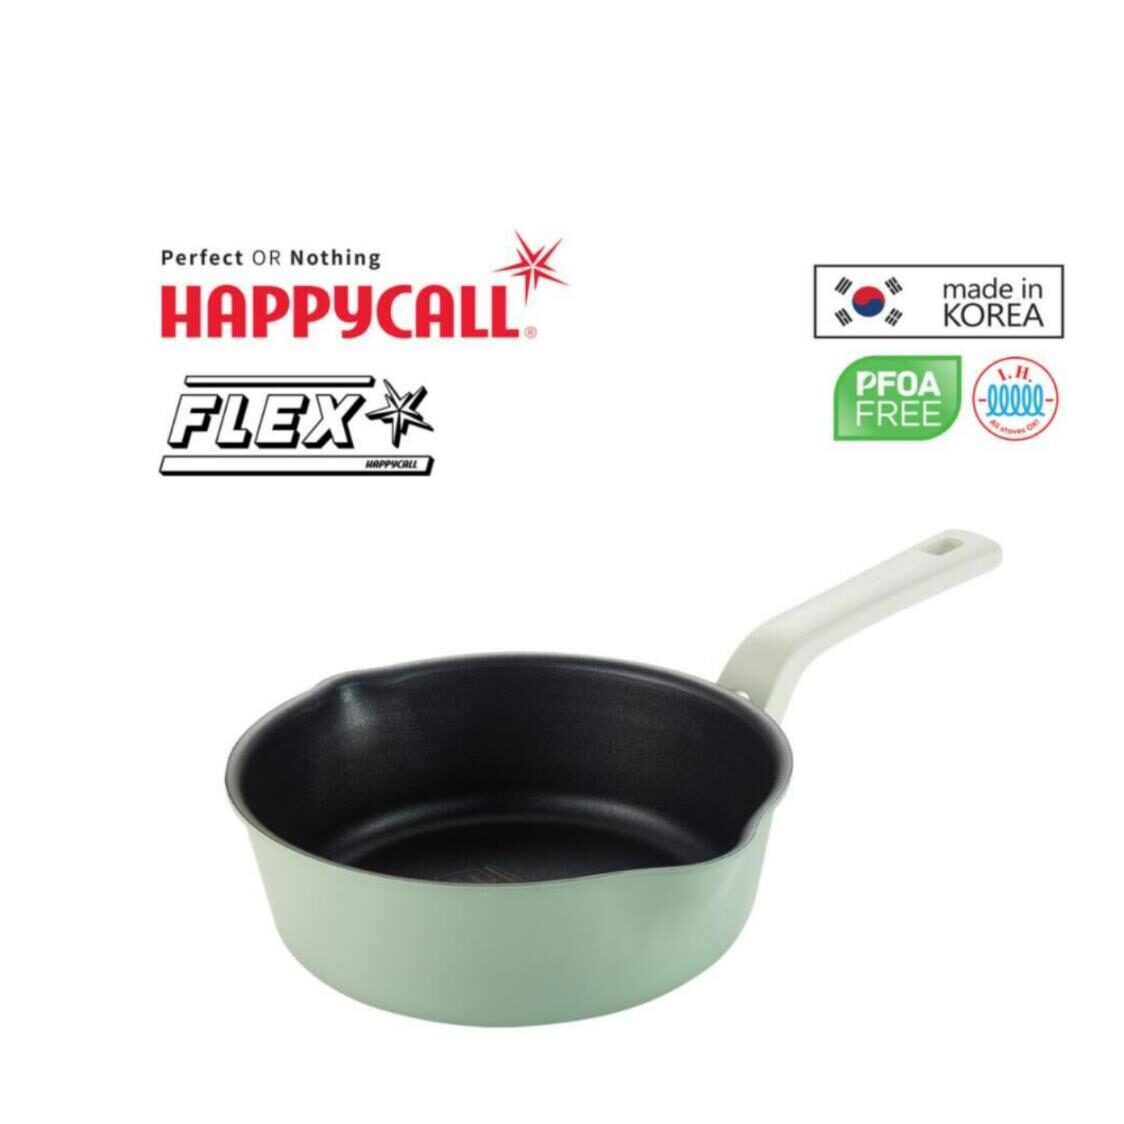 Happycall 20cm IH Flex Pan - Lollipop Mint 3001-0520